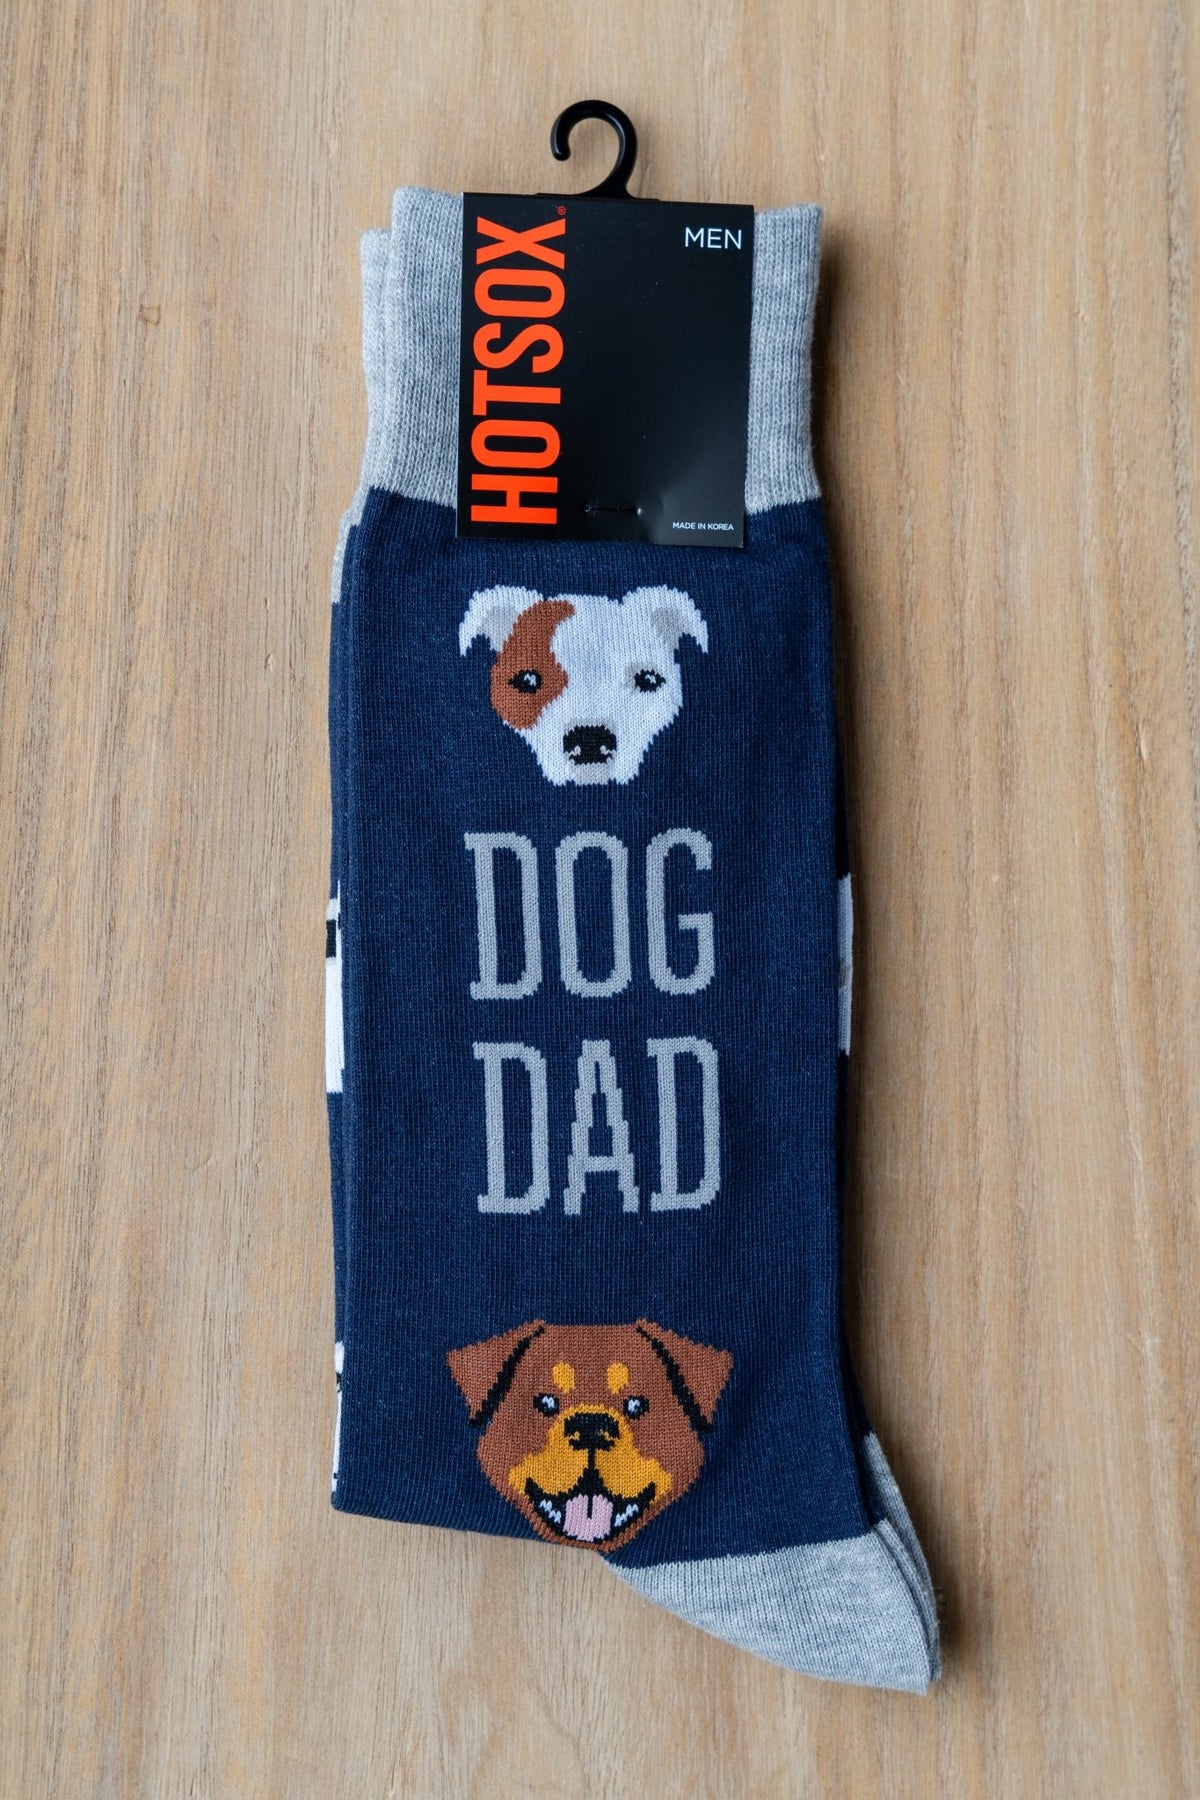 HotSox dog dad socks navy - Trendy Socks at Lush Fashion Lounge Boutique in Oklahoma City